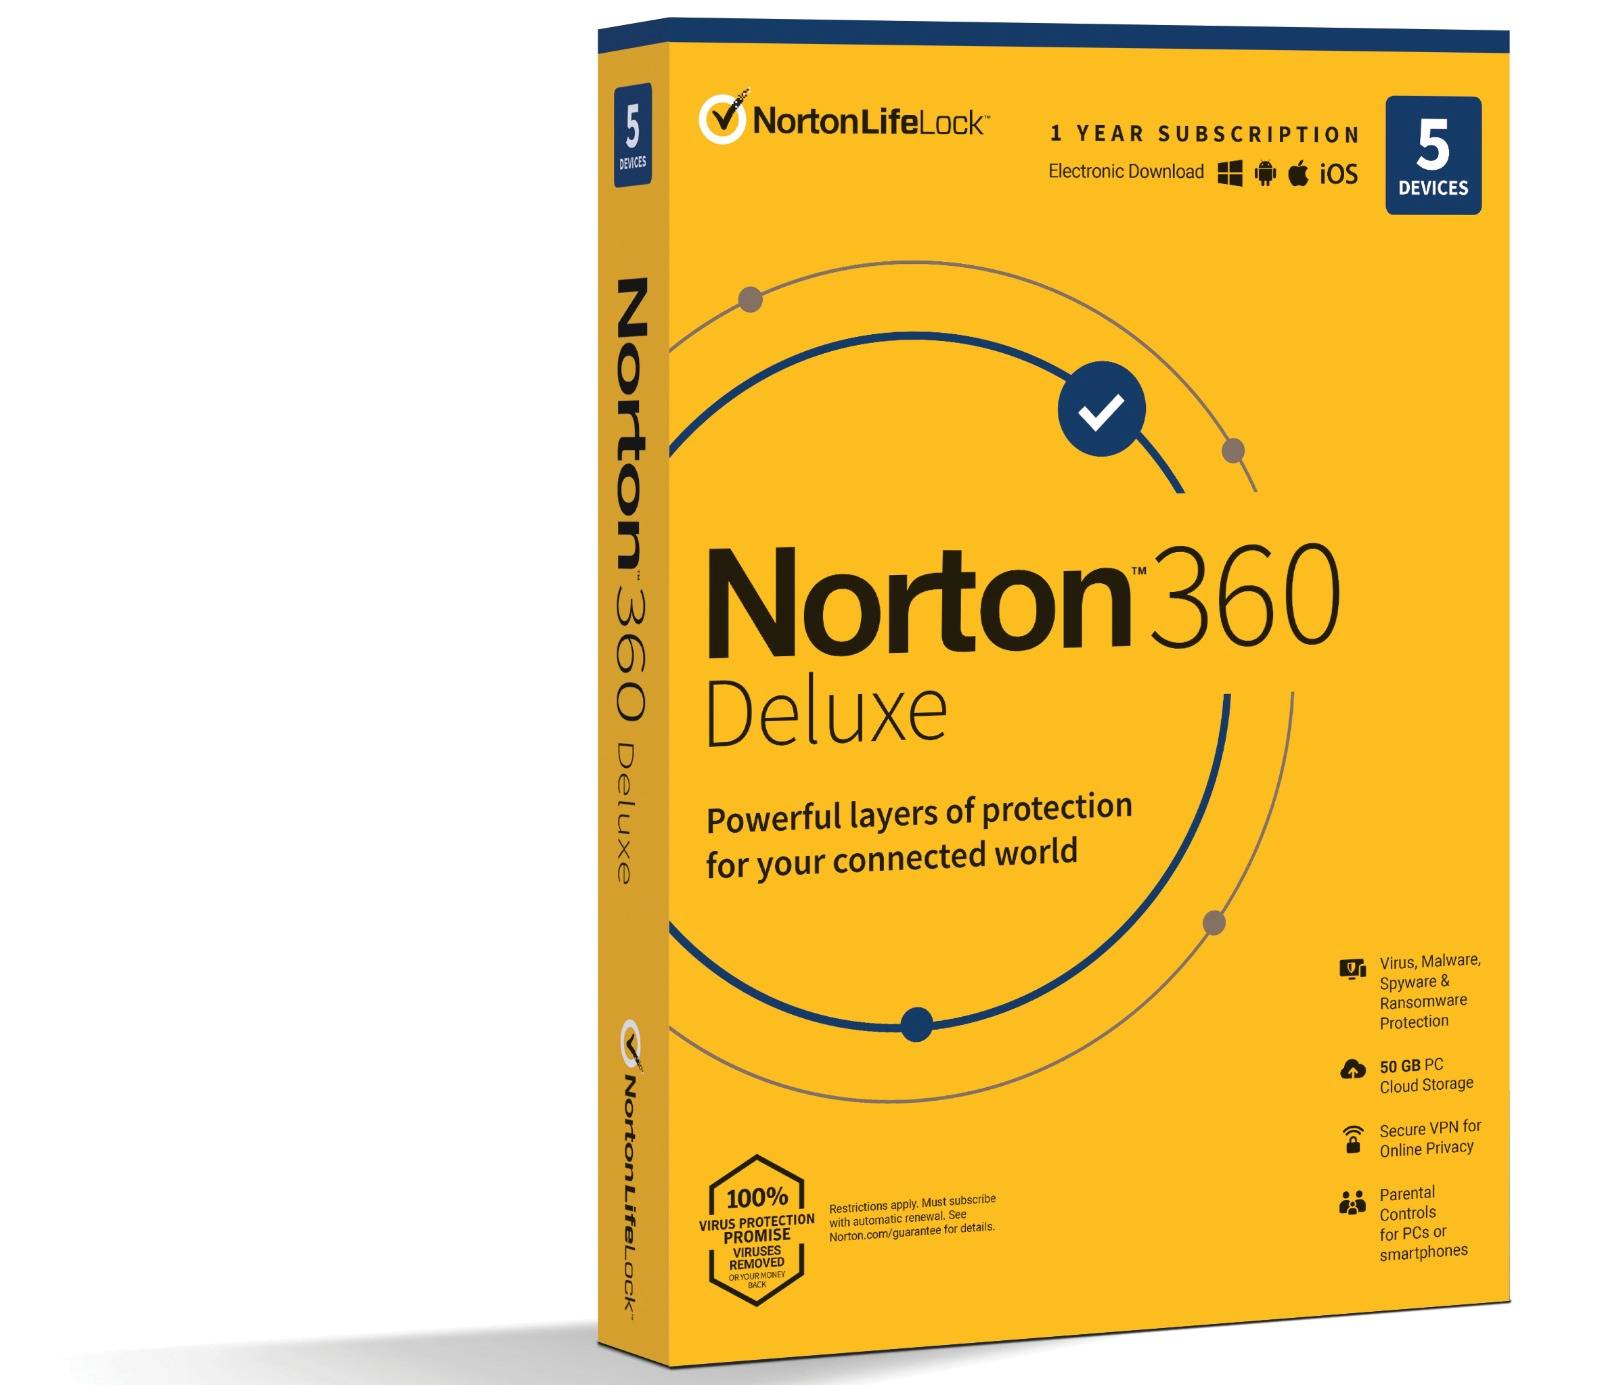 Norton 360 review